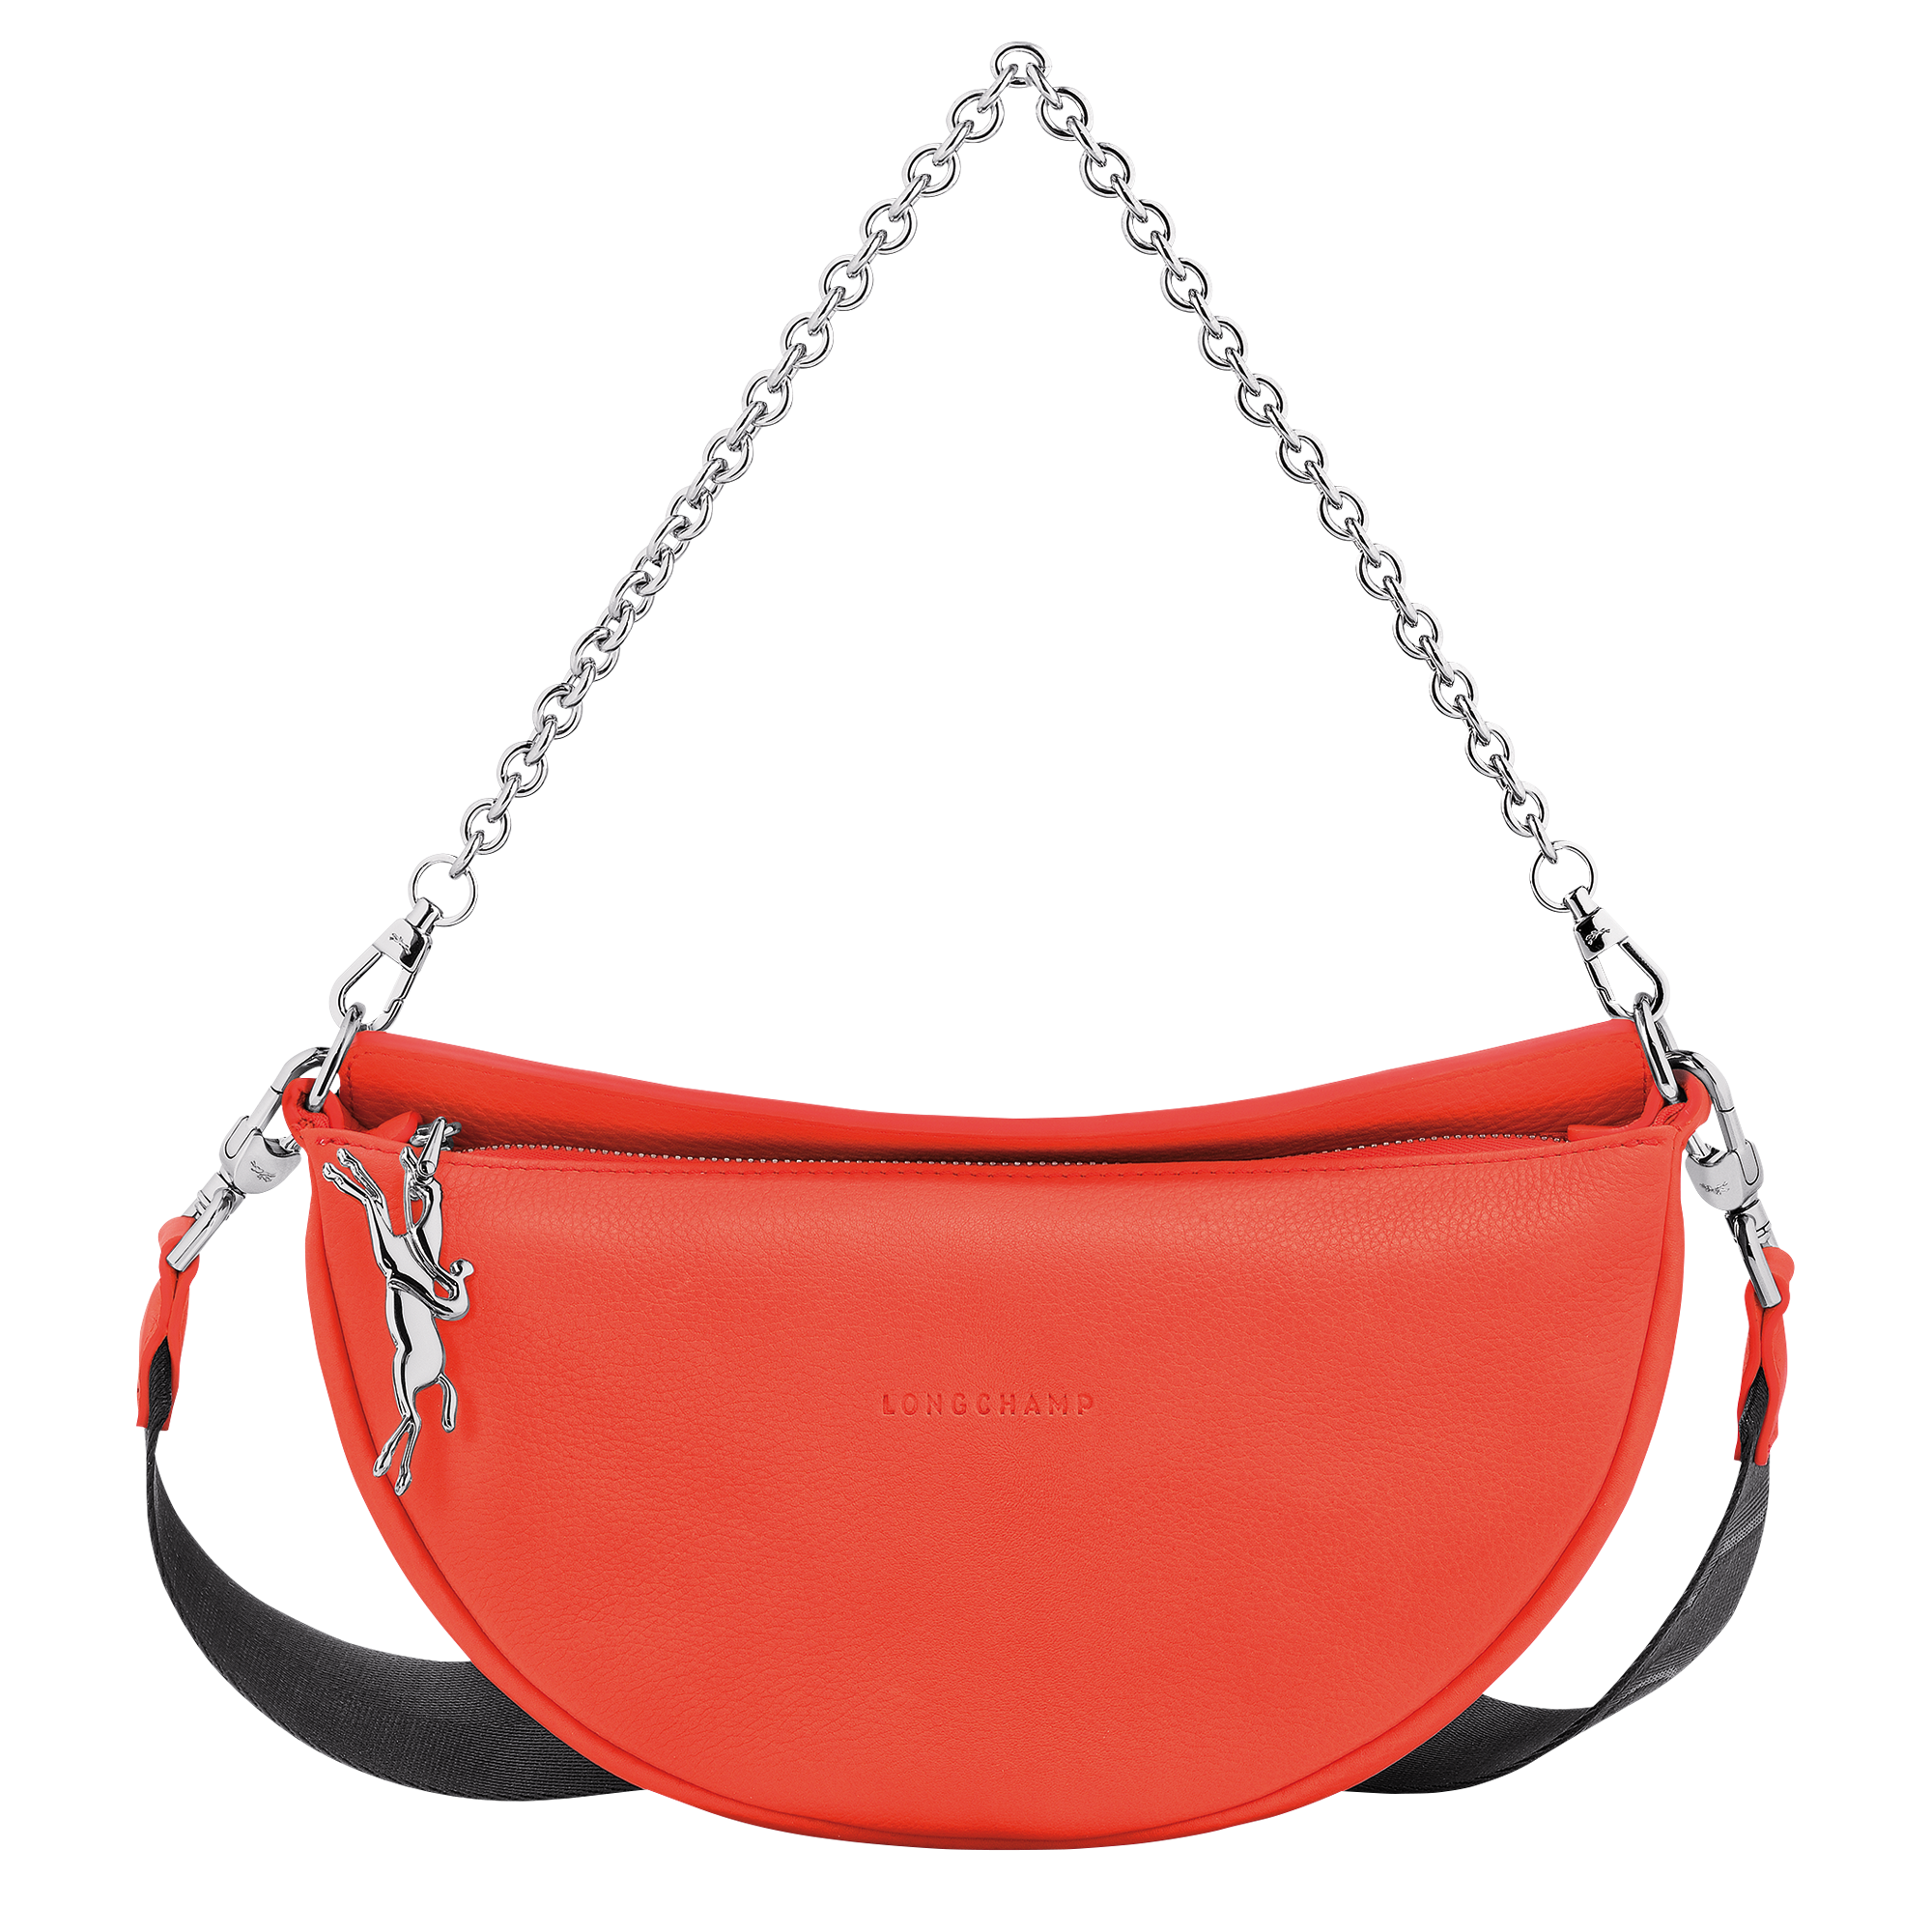 New Latest LONGCHAMP XS Trot orange leather mini crossbody bag w/ 2 handles